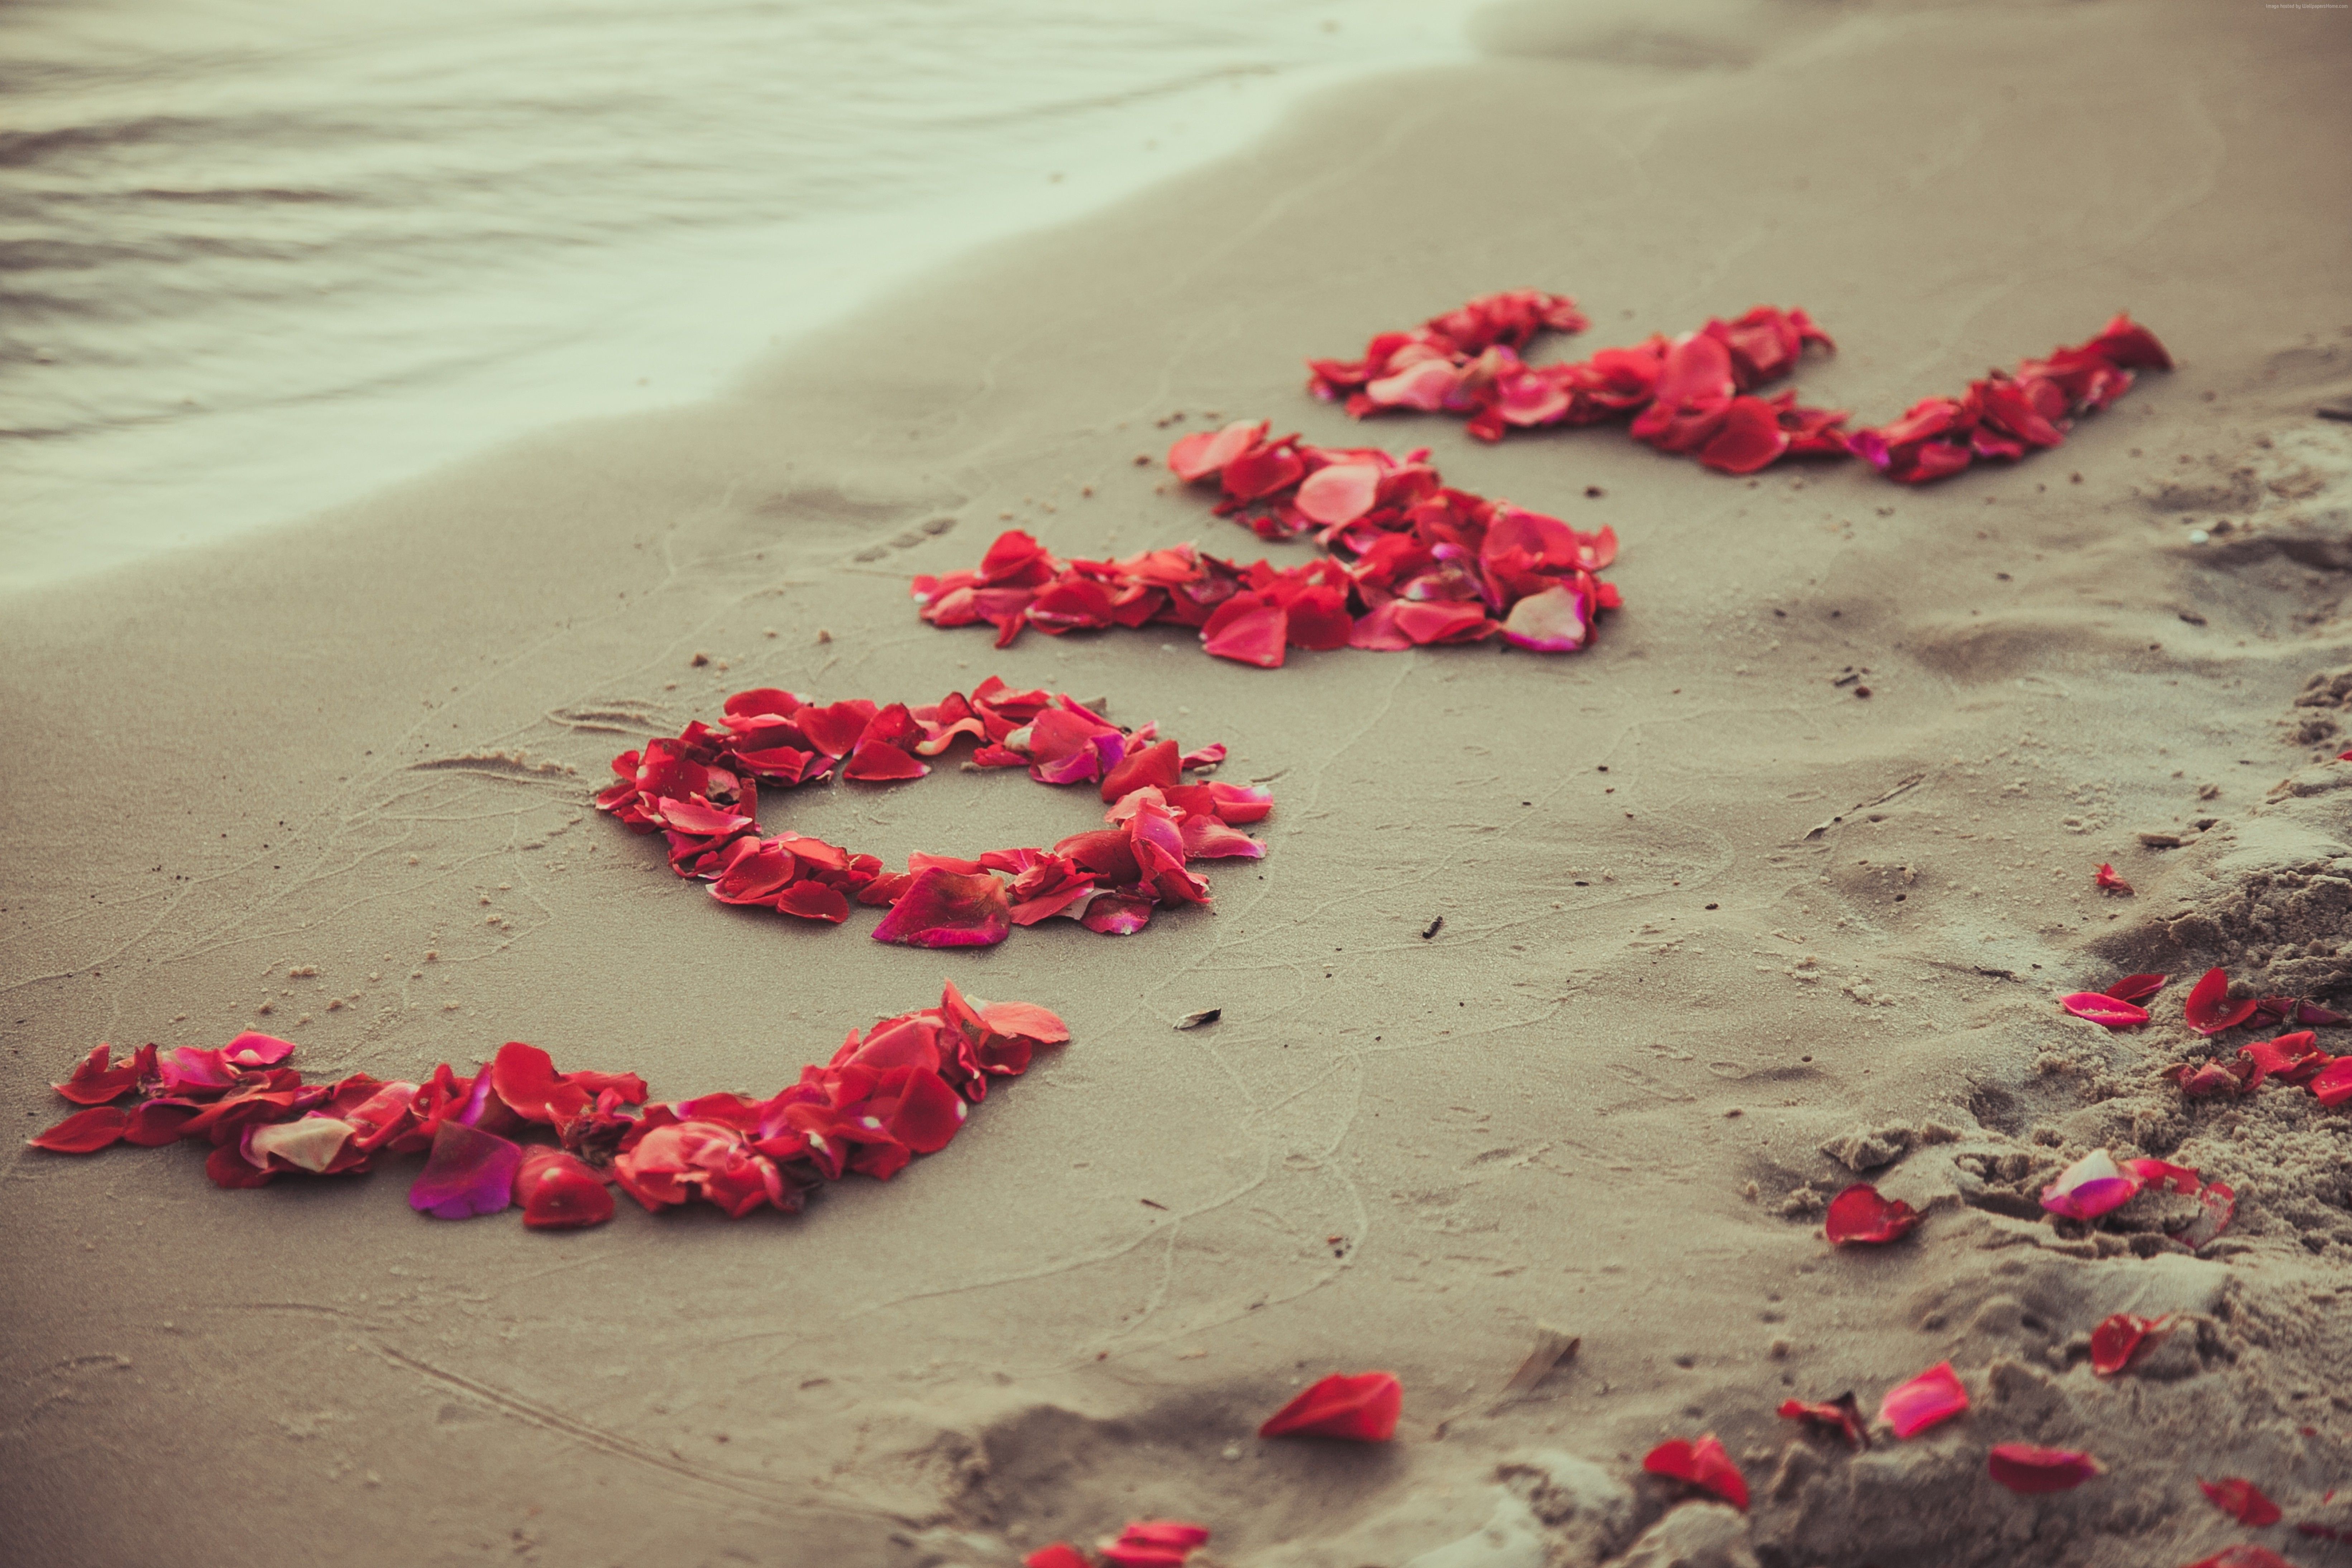 6564x4376 k, #beach, #sea, #love image, #heart, #flowers. Stock on WallpaperBat